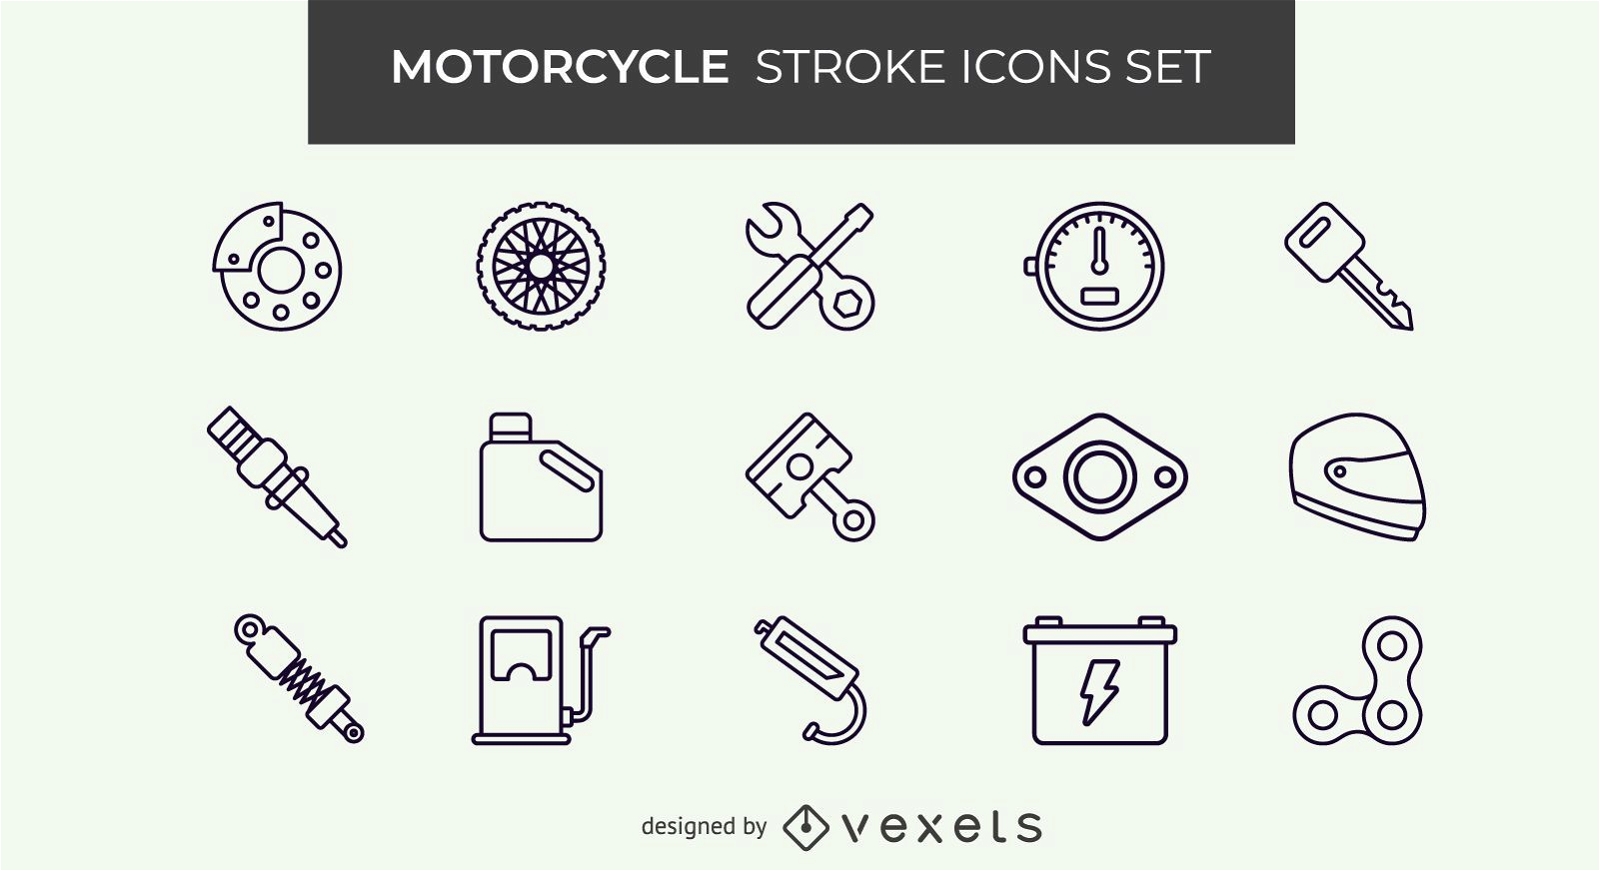 Motorcycle stroke icon set